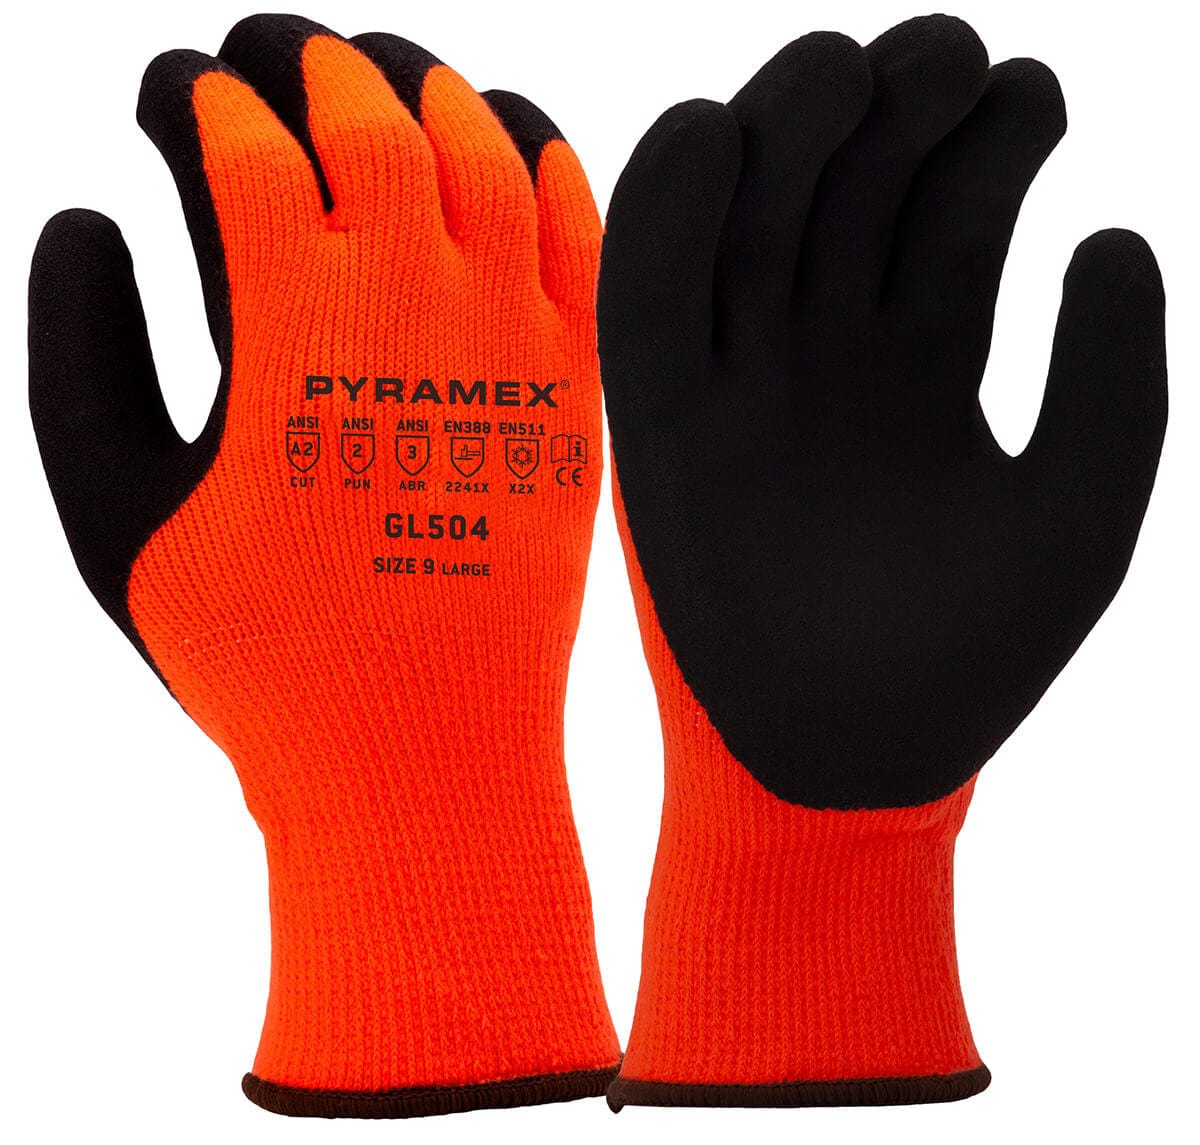 Pyramex GL504 Hi-Vis Winter Cut-Resistant Gloves